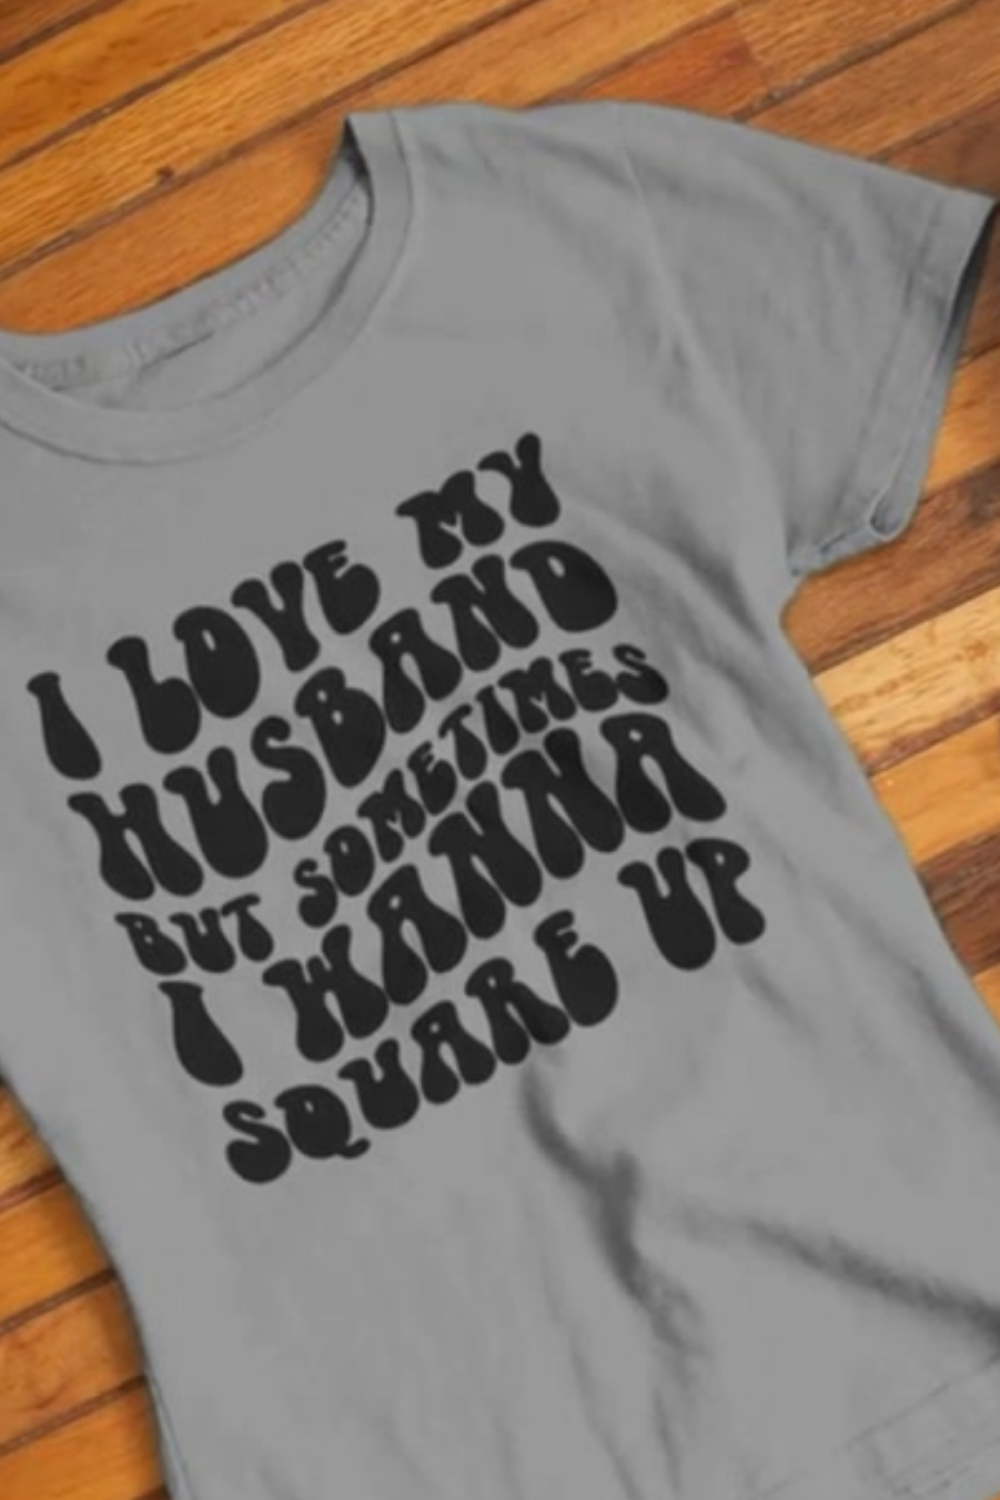 I Love My Husband But Sometimes I Wanna Square Up | Funny T-shirt | Retro Design